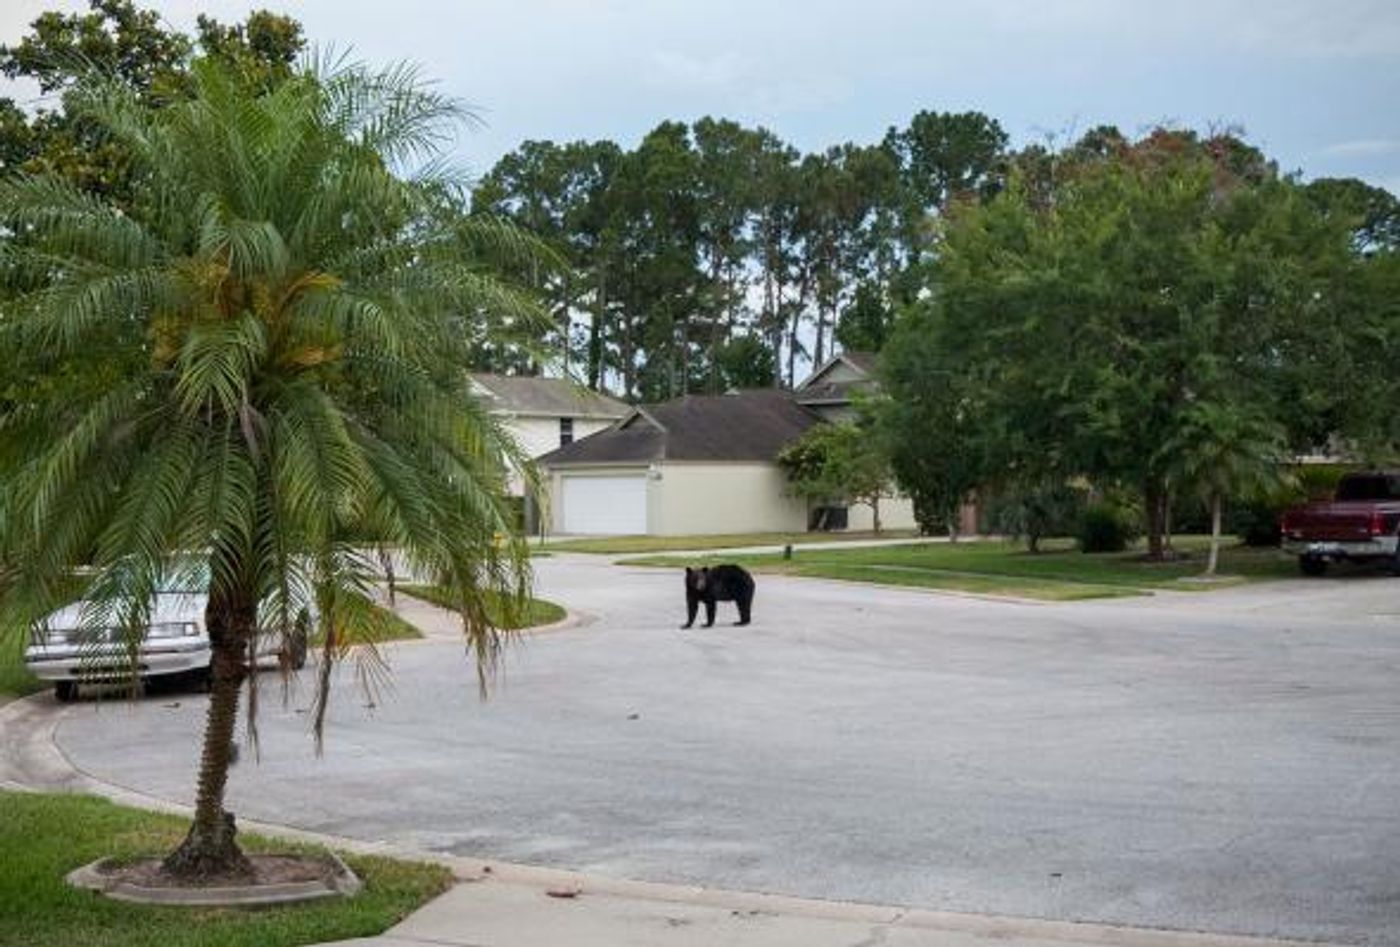  A black bear on a residential street in Daytona Beach, Florida.  